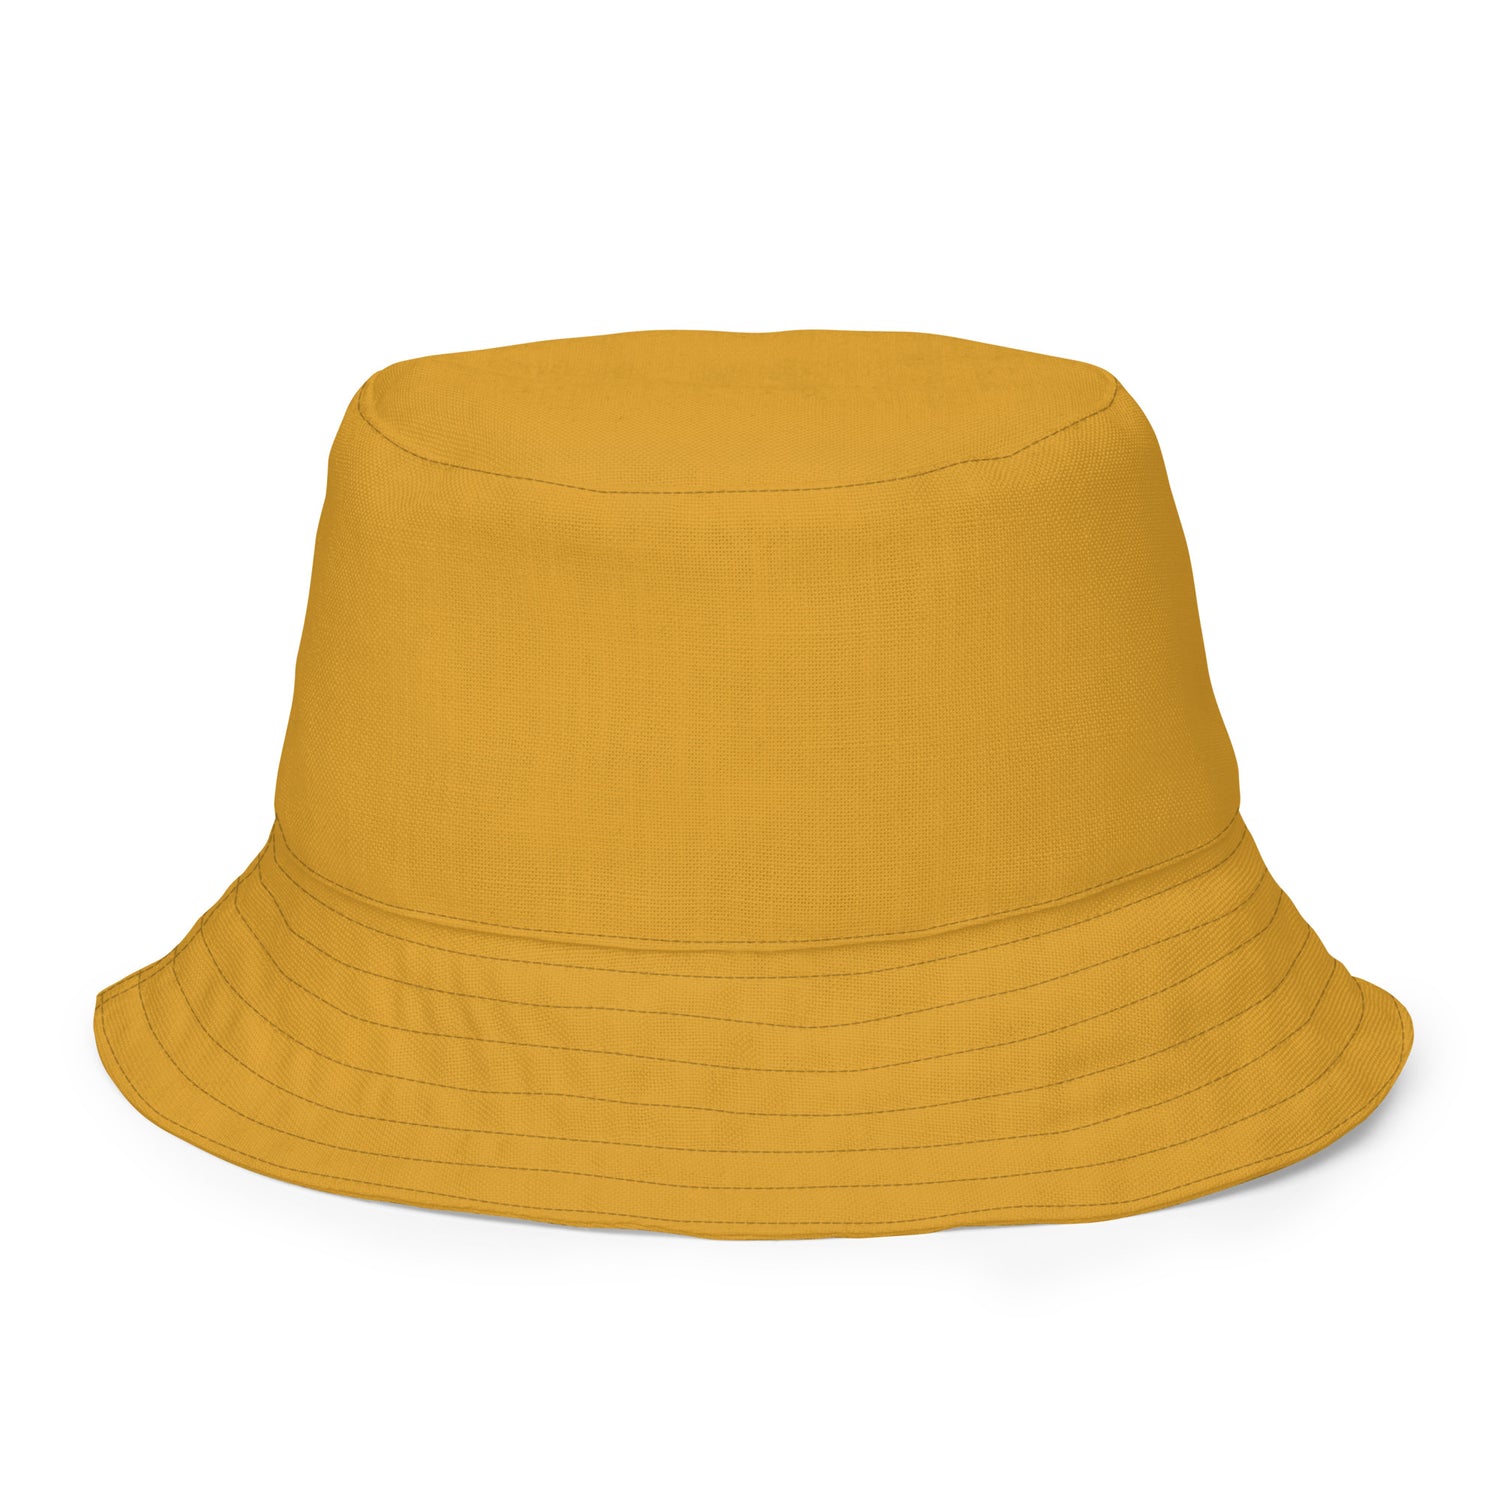 Malian Mud Cloth Reversible Bucket Hat